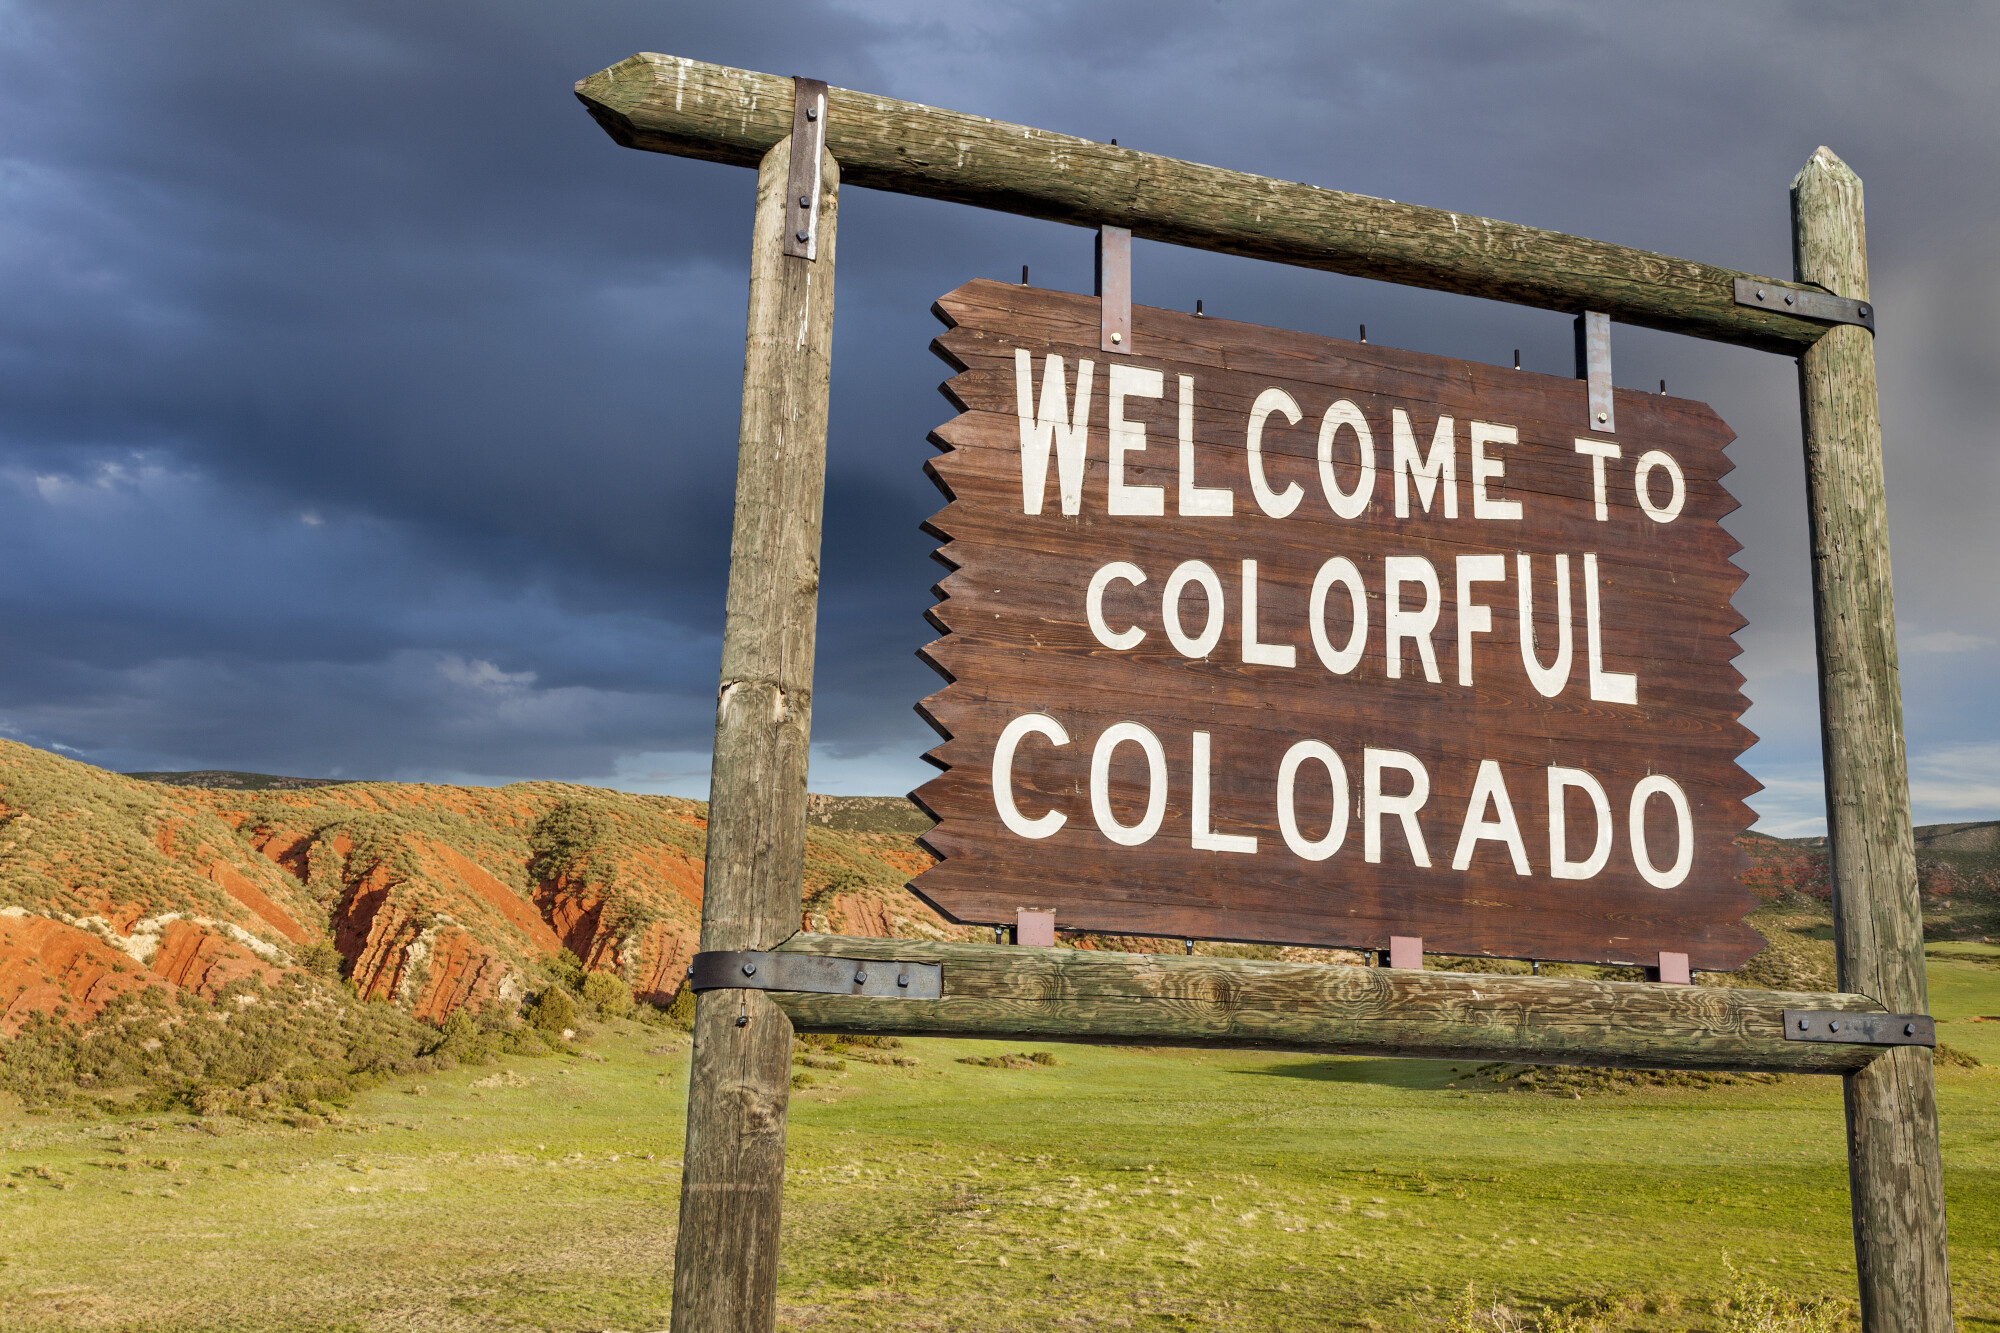 Plan a Trip to Colorado